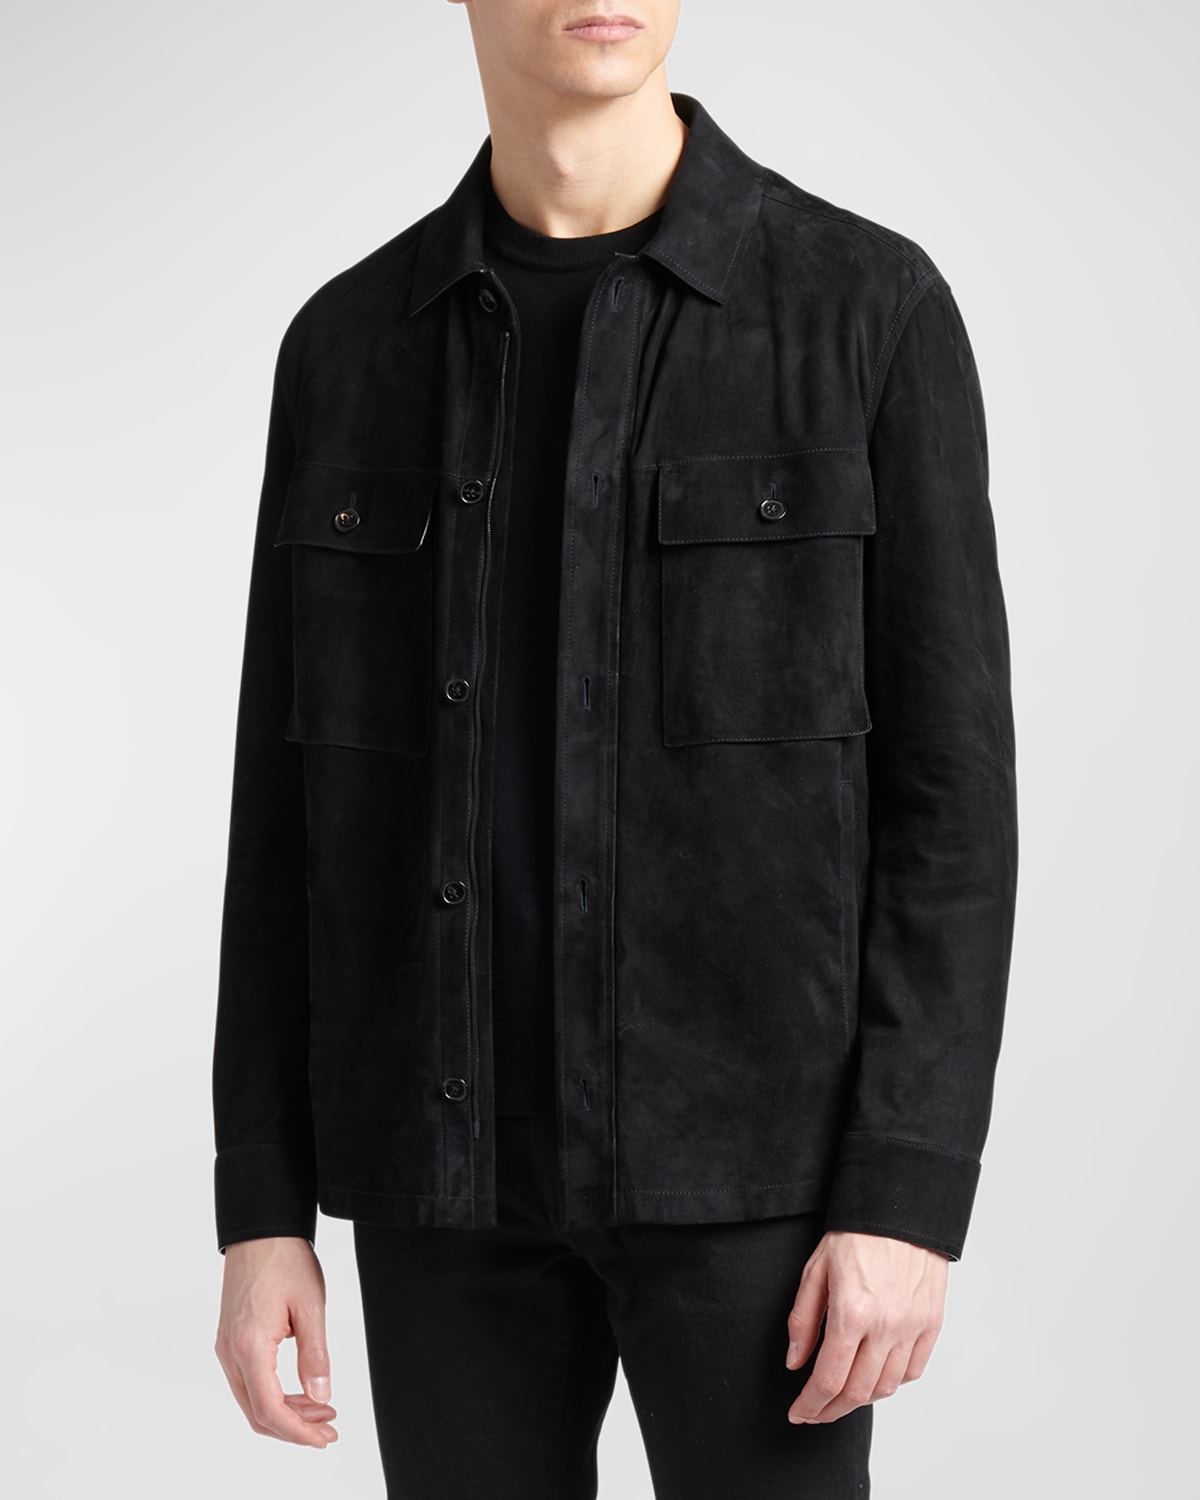 Men's Suede Leather Overshirt Jacket